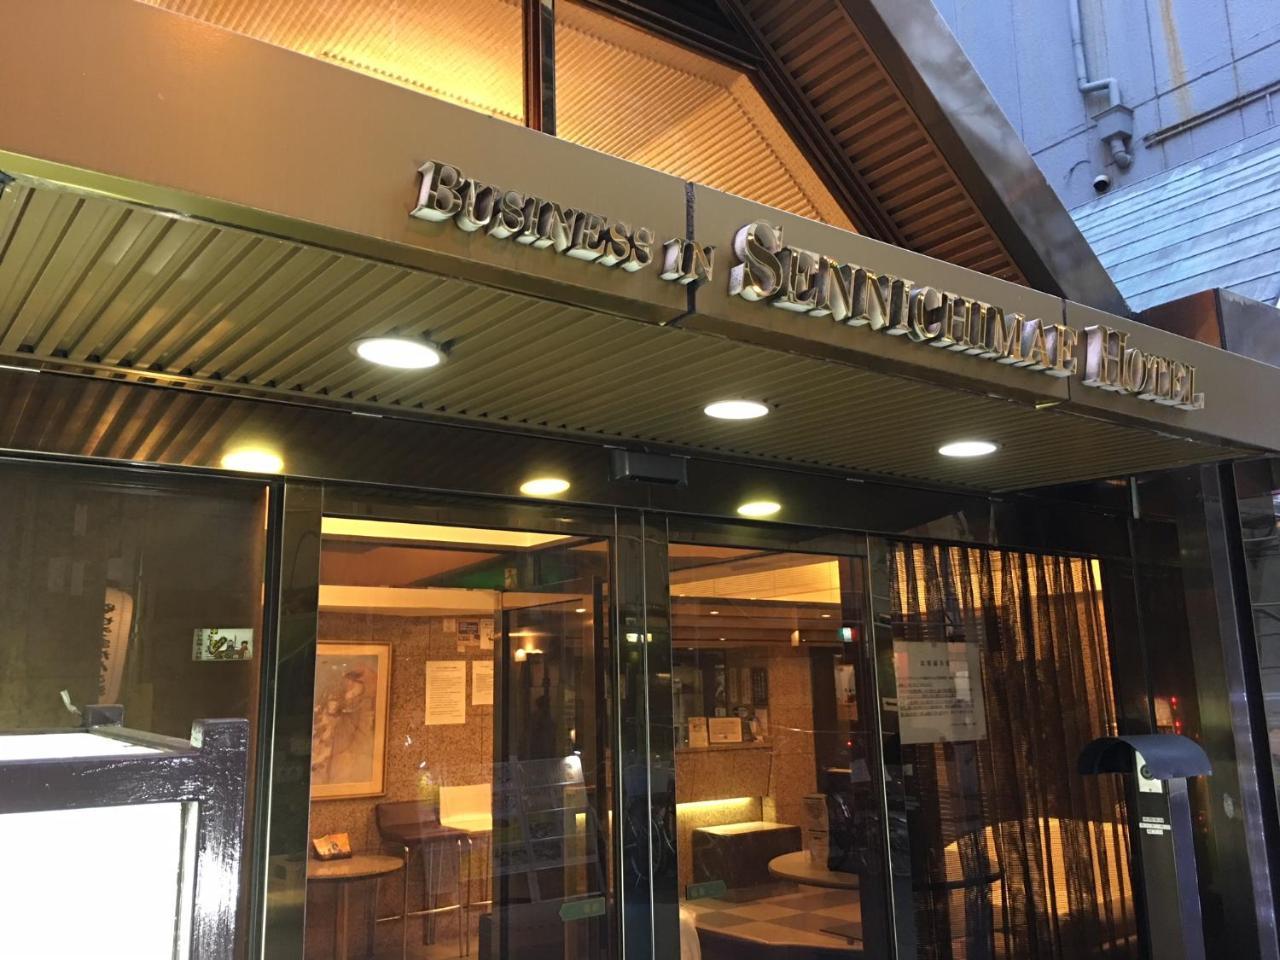 Business Inn Sennichimae Hotel Ōsaka Exterior foto